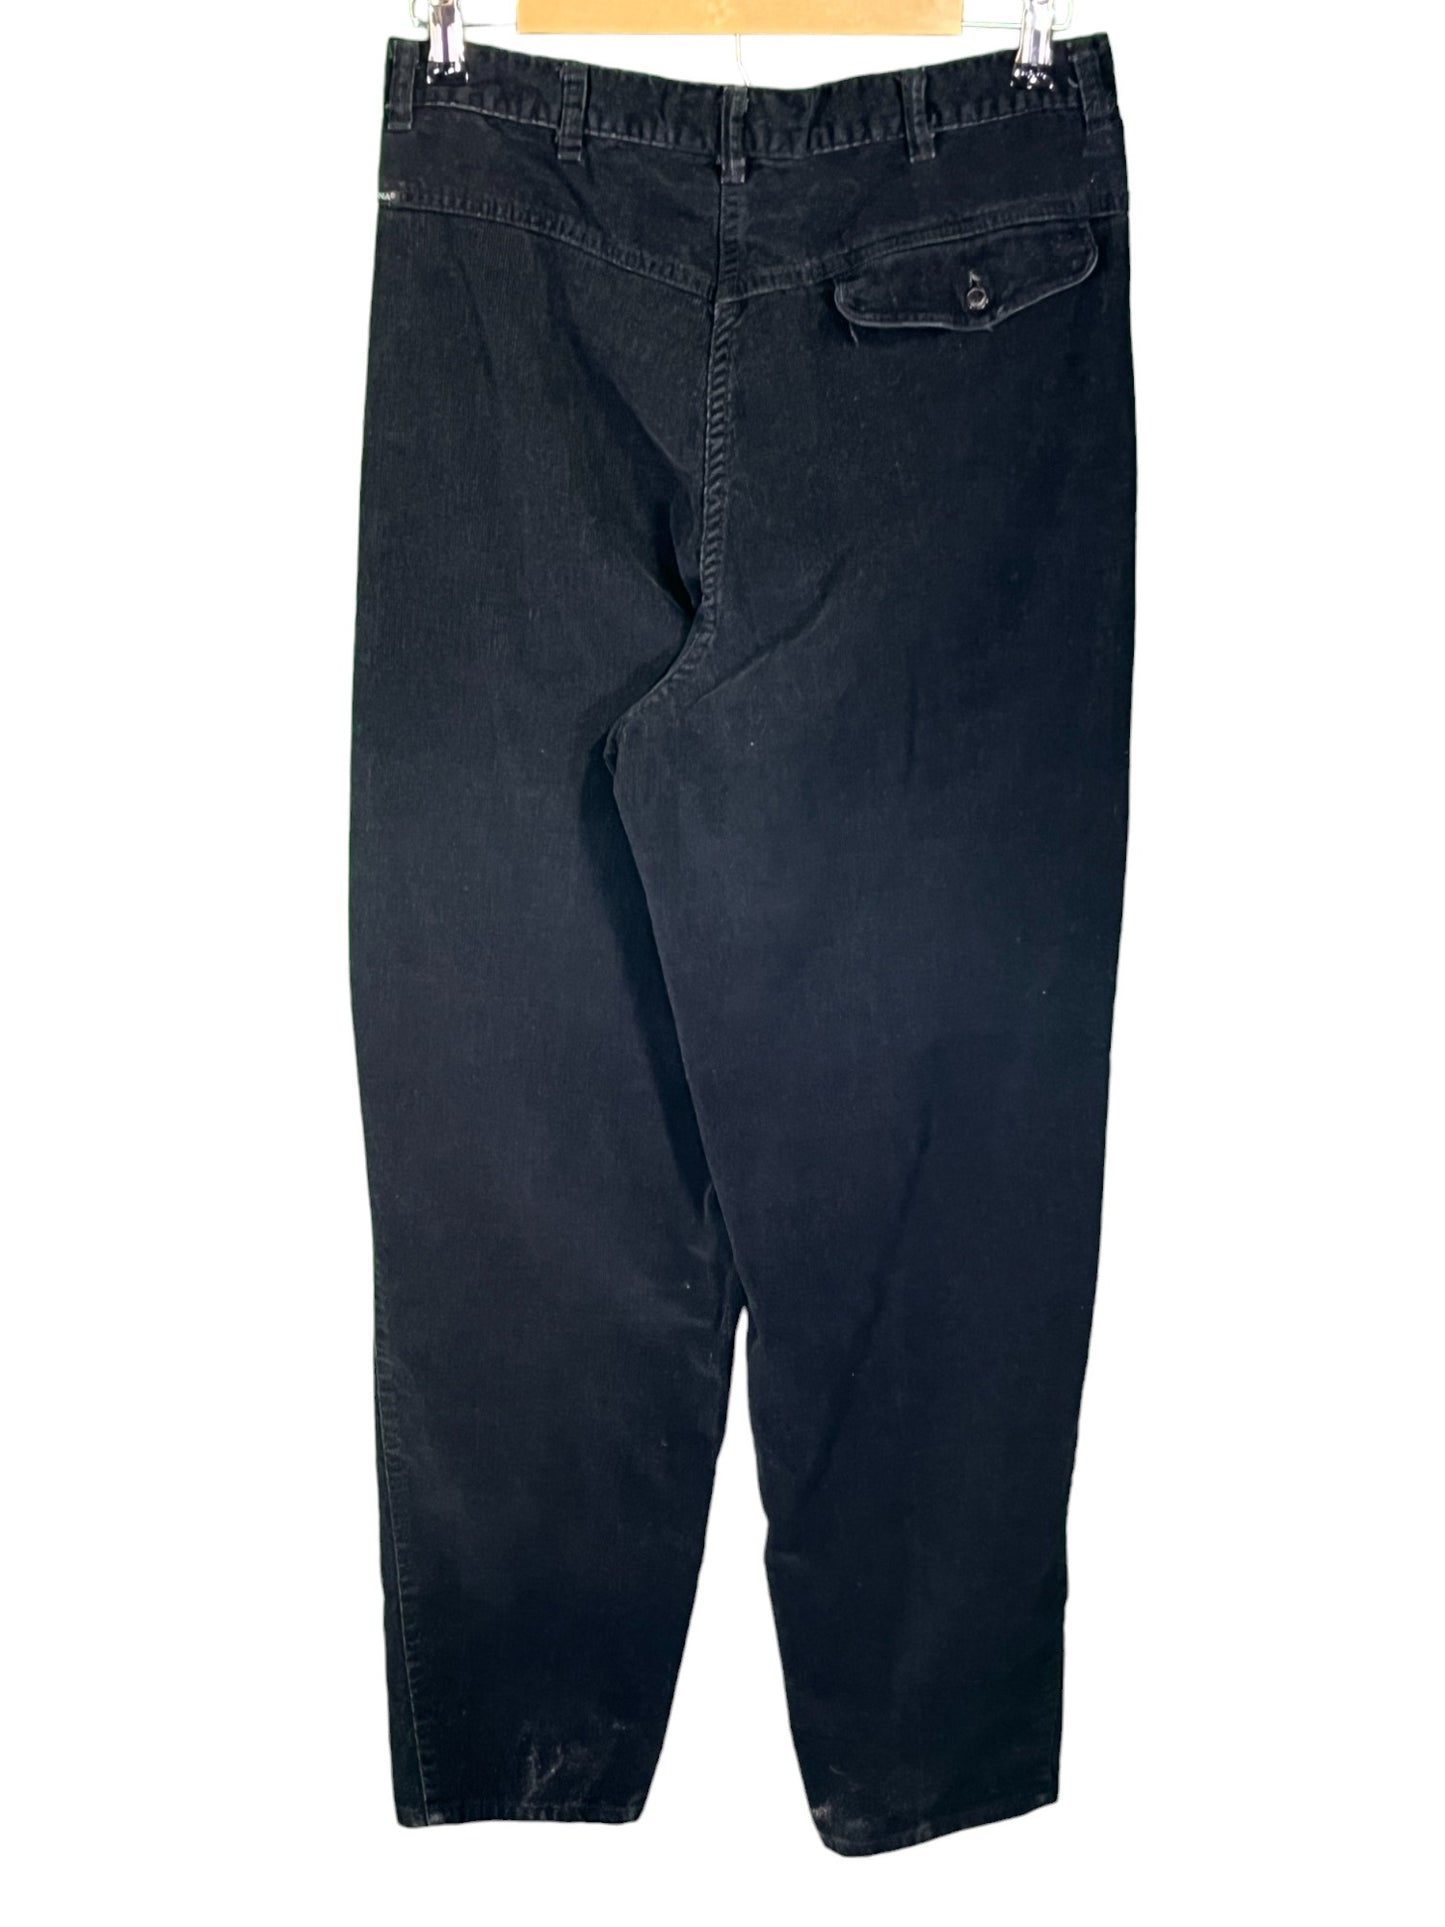 Vintage 90's Black Corduroy Straight Leg Pants Size 30x31